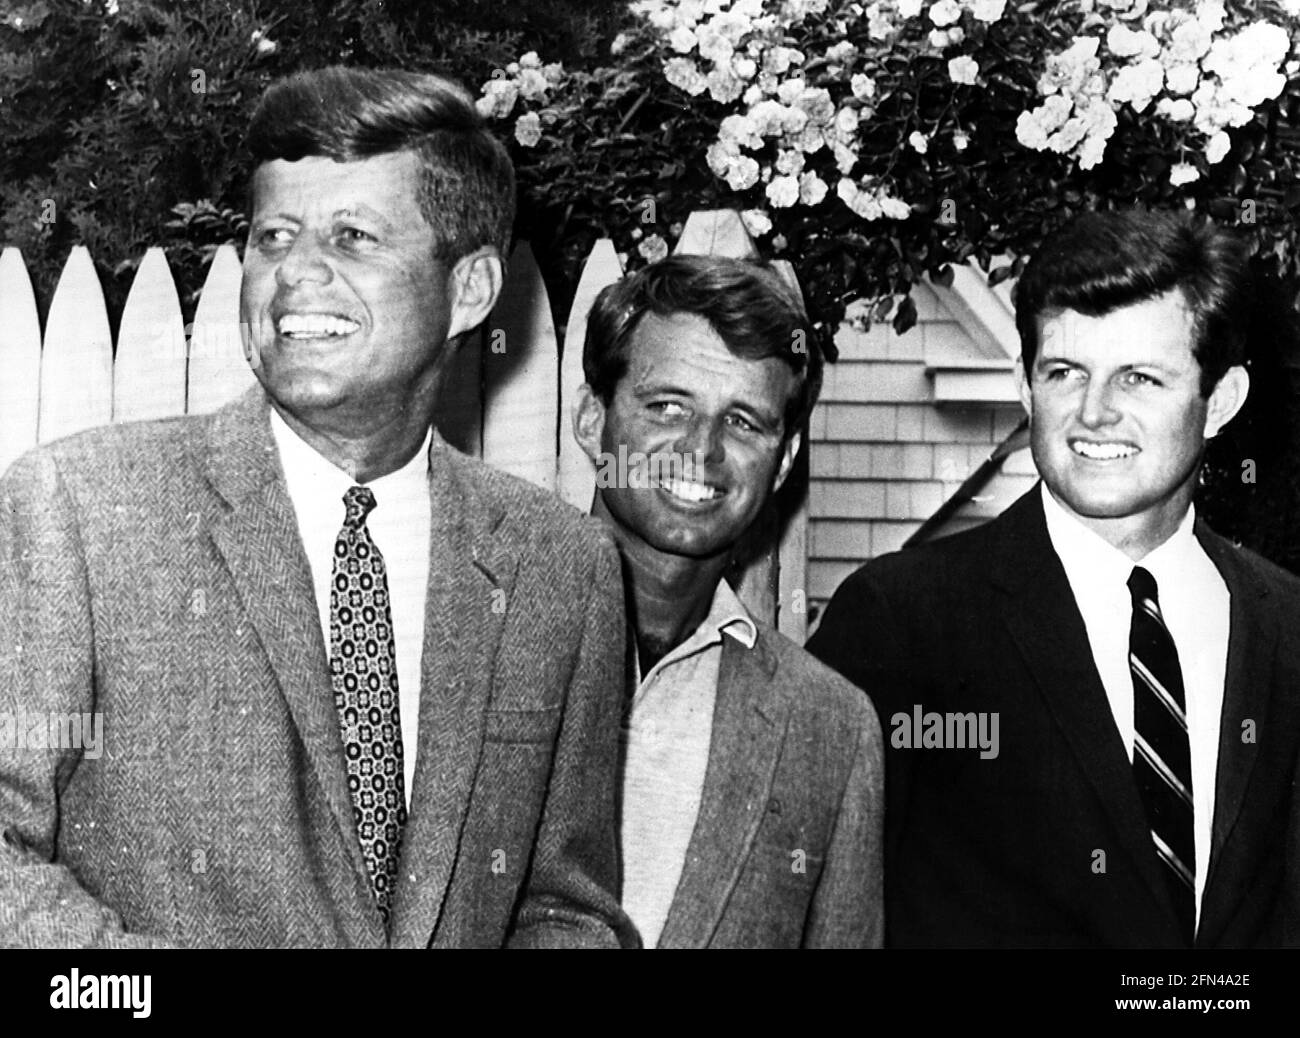 Kennedy, John Fitzgerald, 29.5.1917 - 22.11.1963, amerikanischer Politiker (Demokrat), halbe Länge, ADDITIONAL-RIGHTS-CLEARANCE-INFO-NOT-AVAILABLE Stockfoto